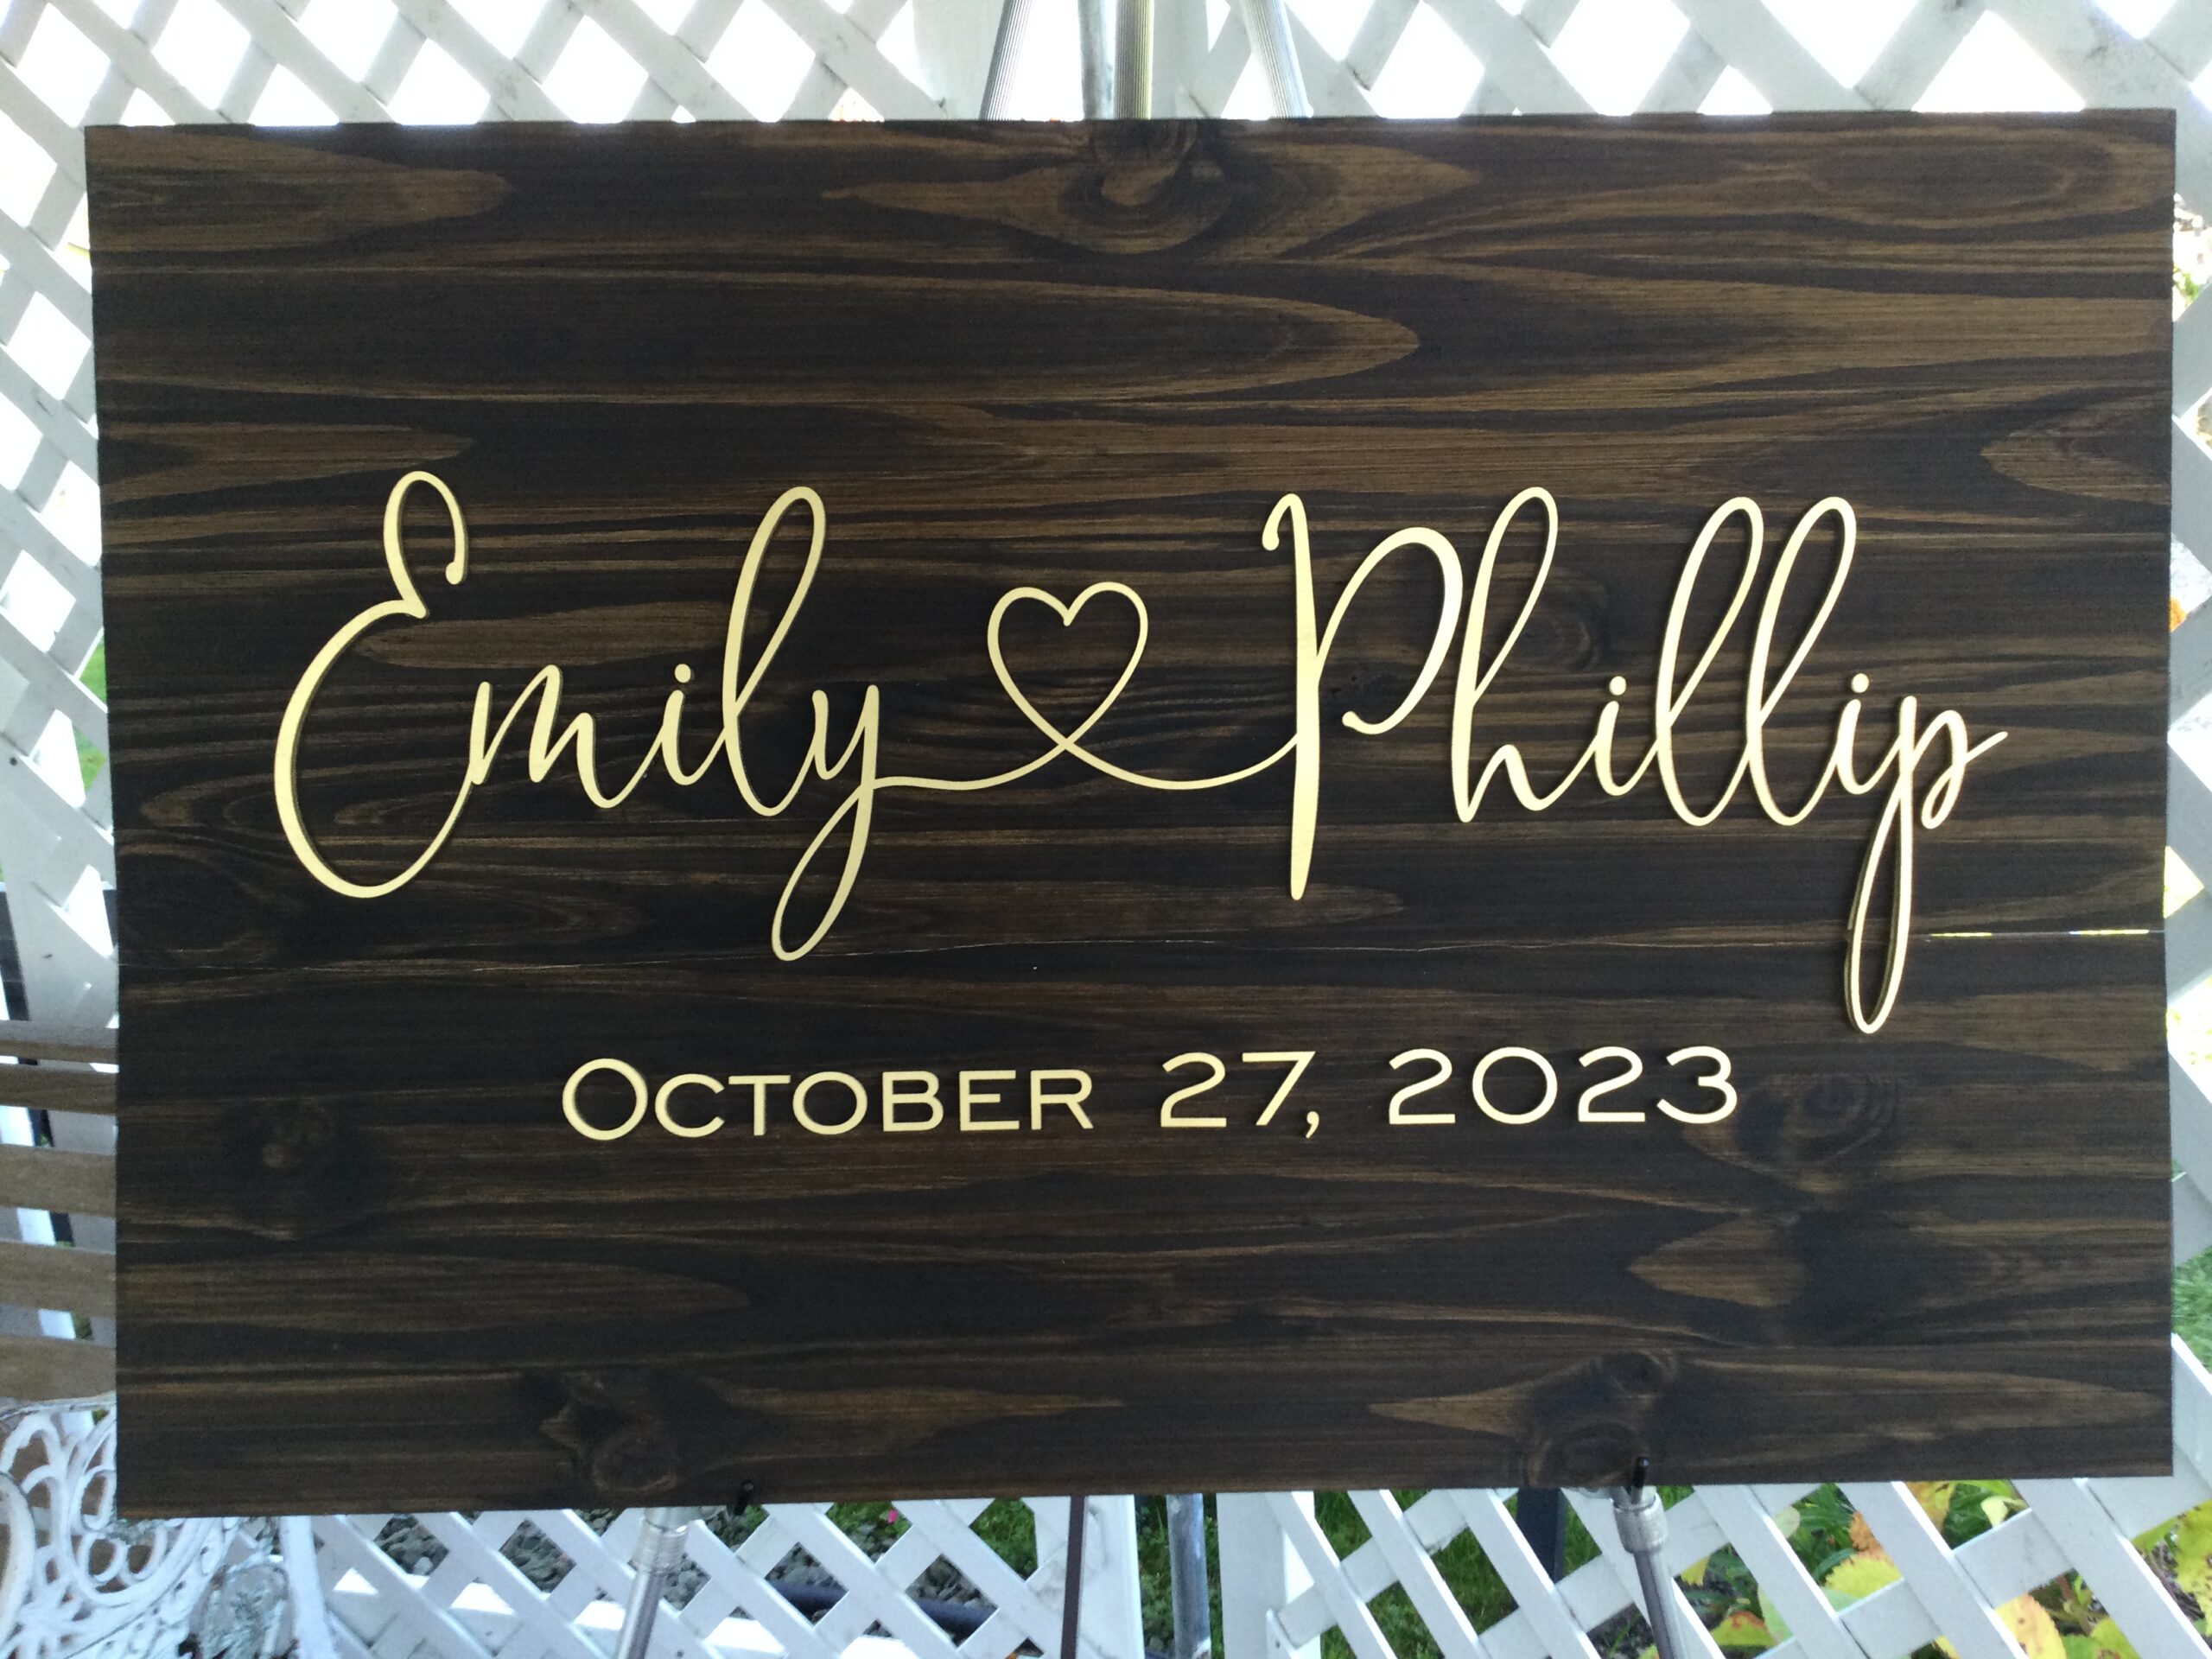 Emily & Phillip Rodgers